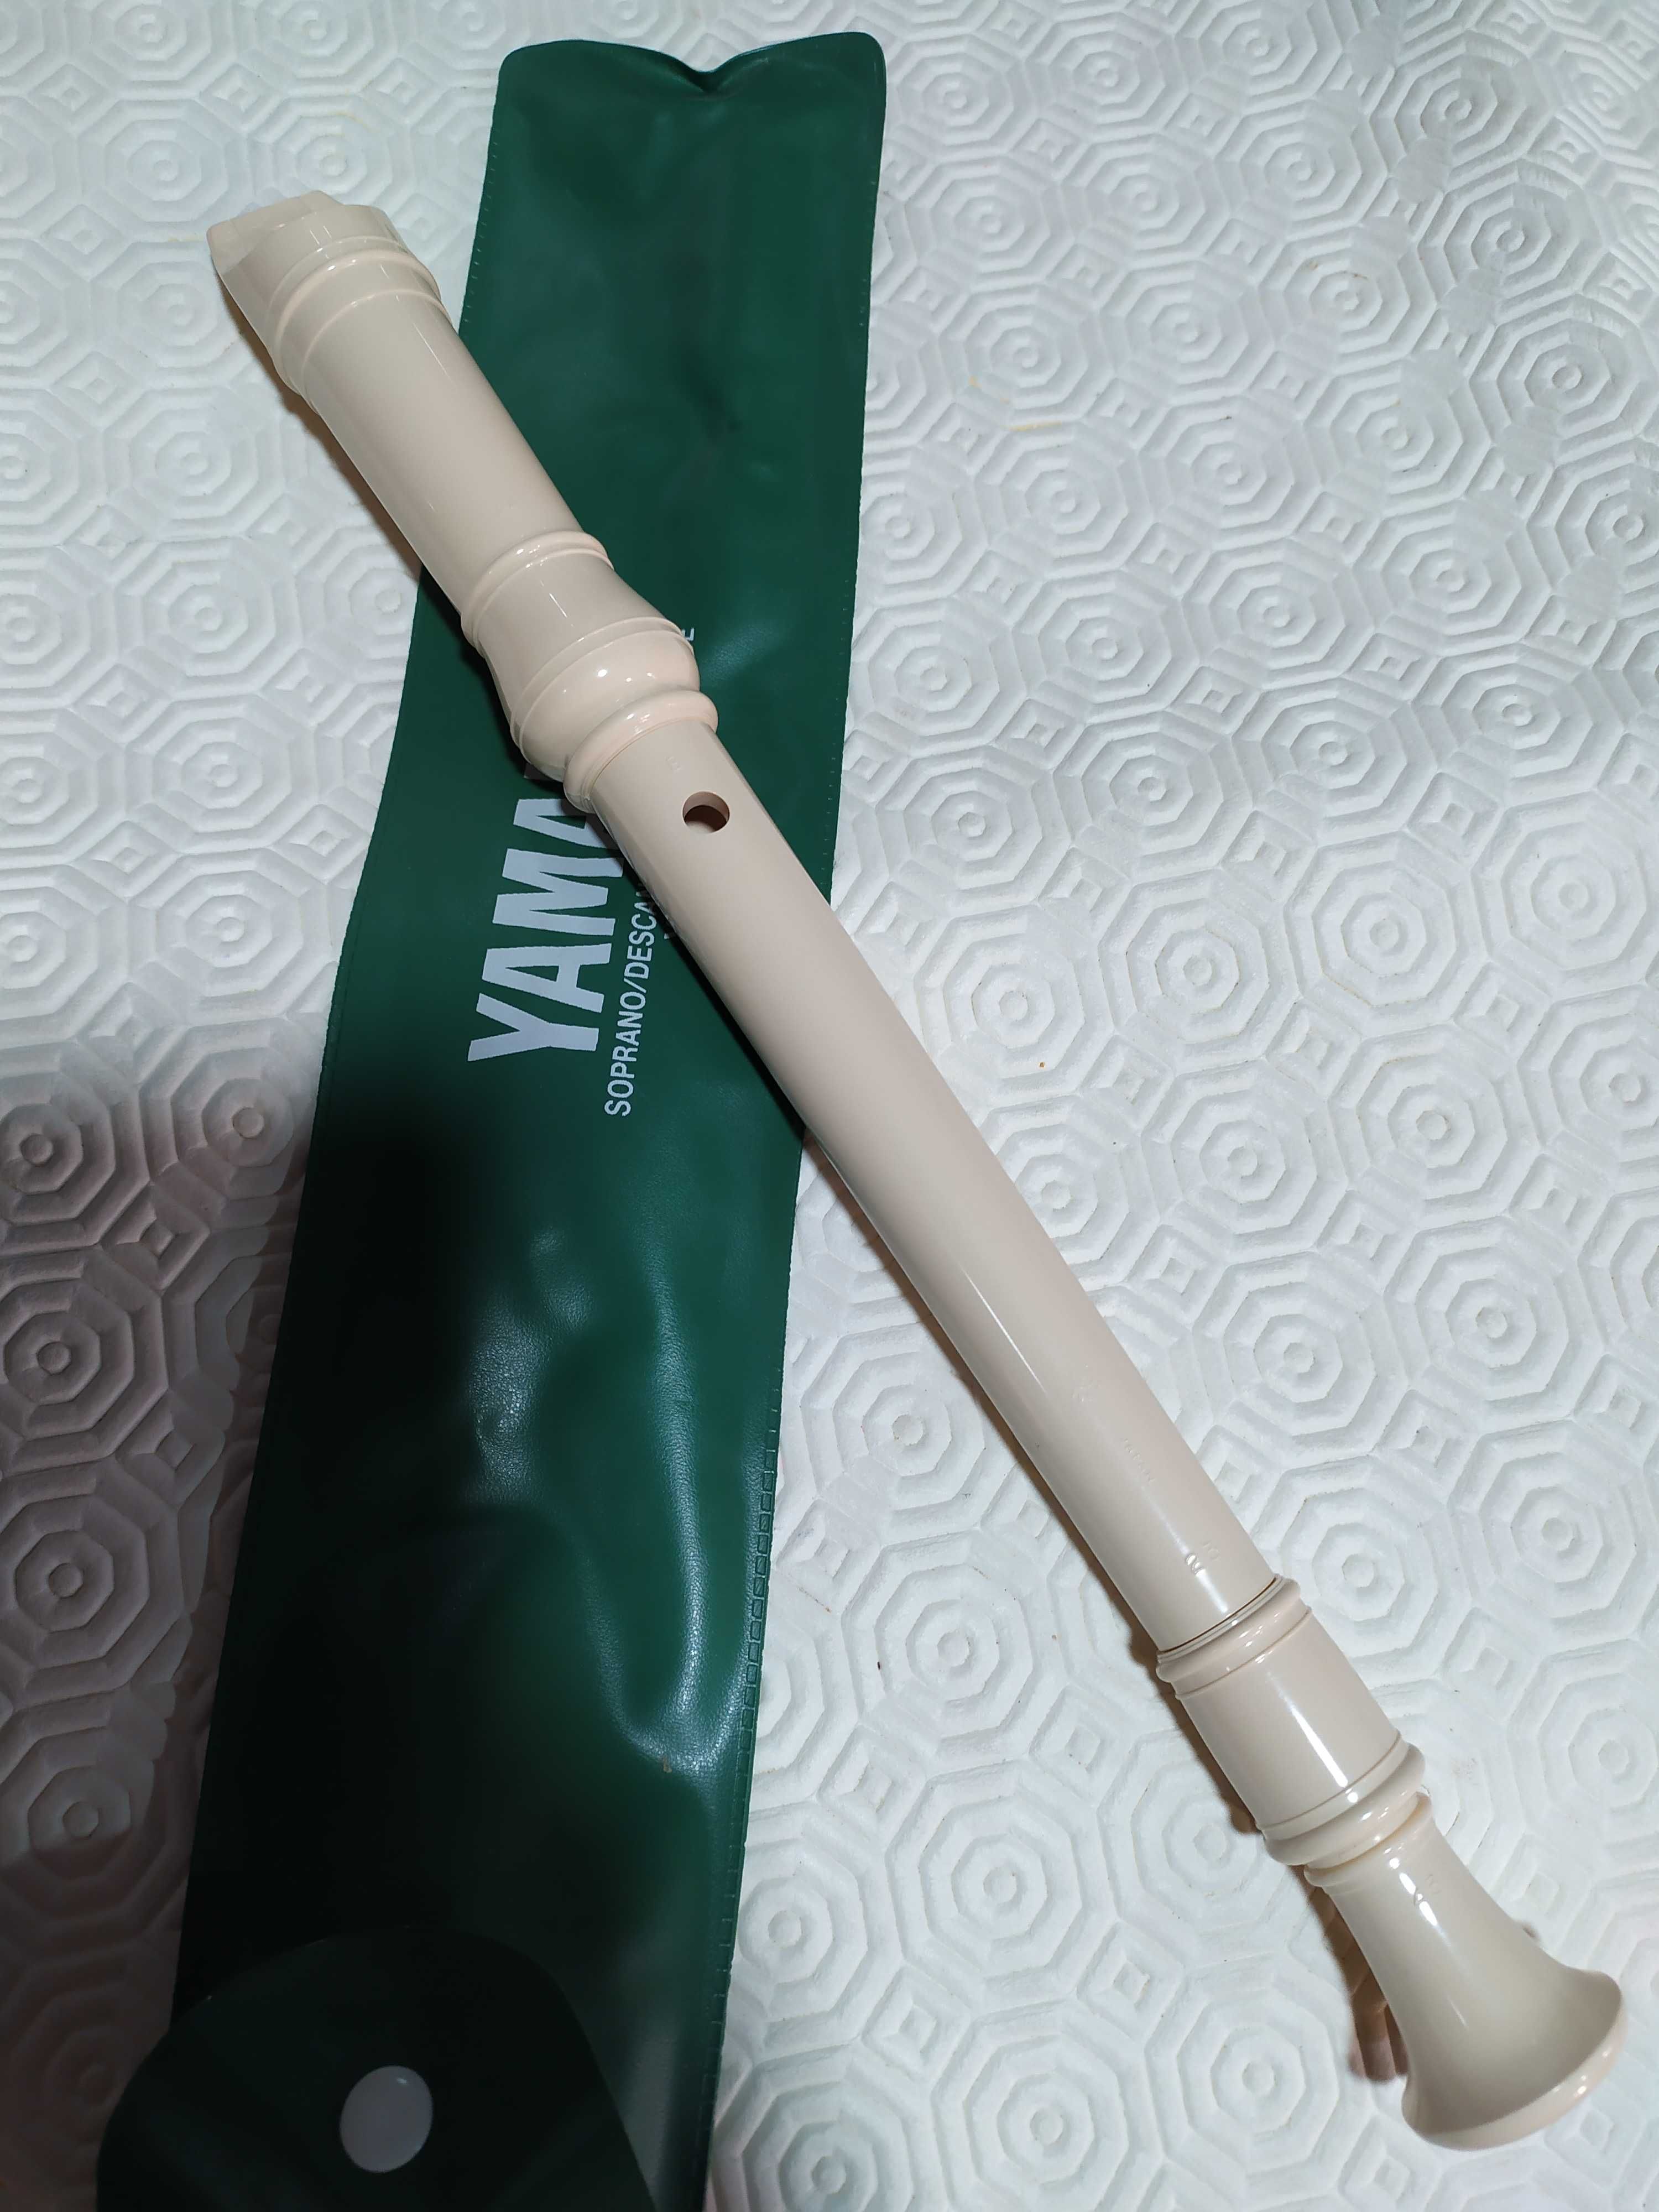 Vendo Flauta Yamaha